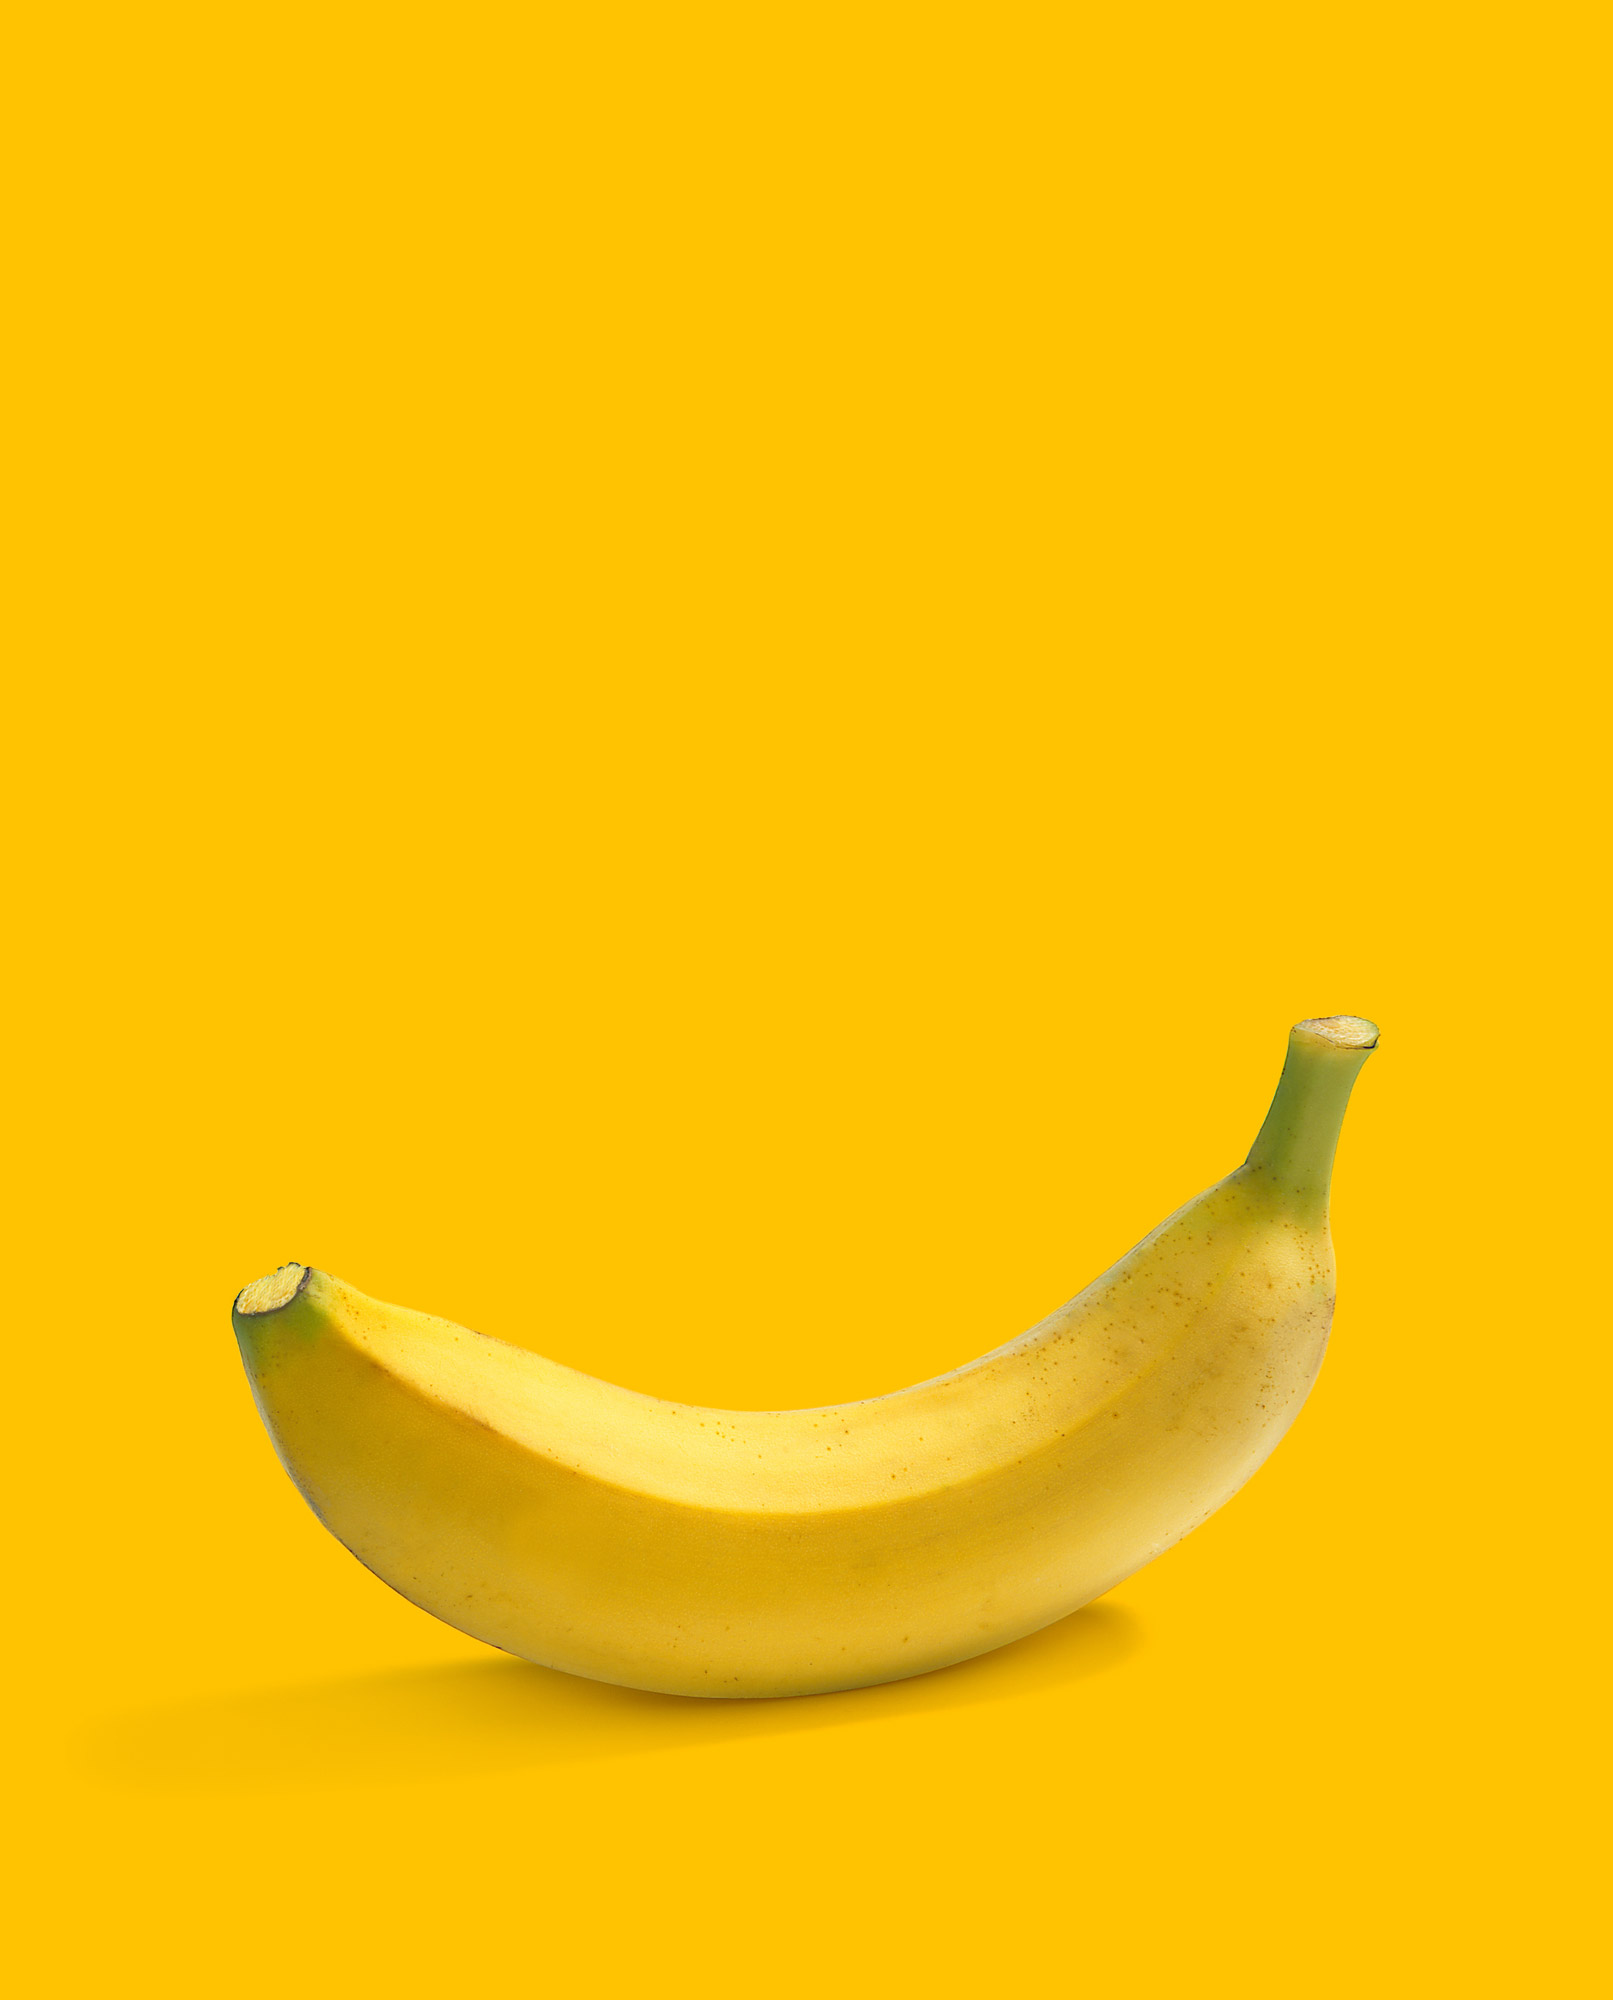 Yellow (banana) on yellow (background) photo